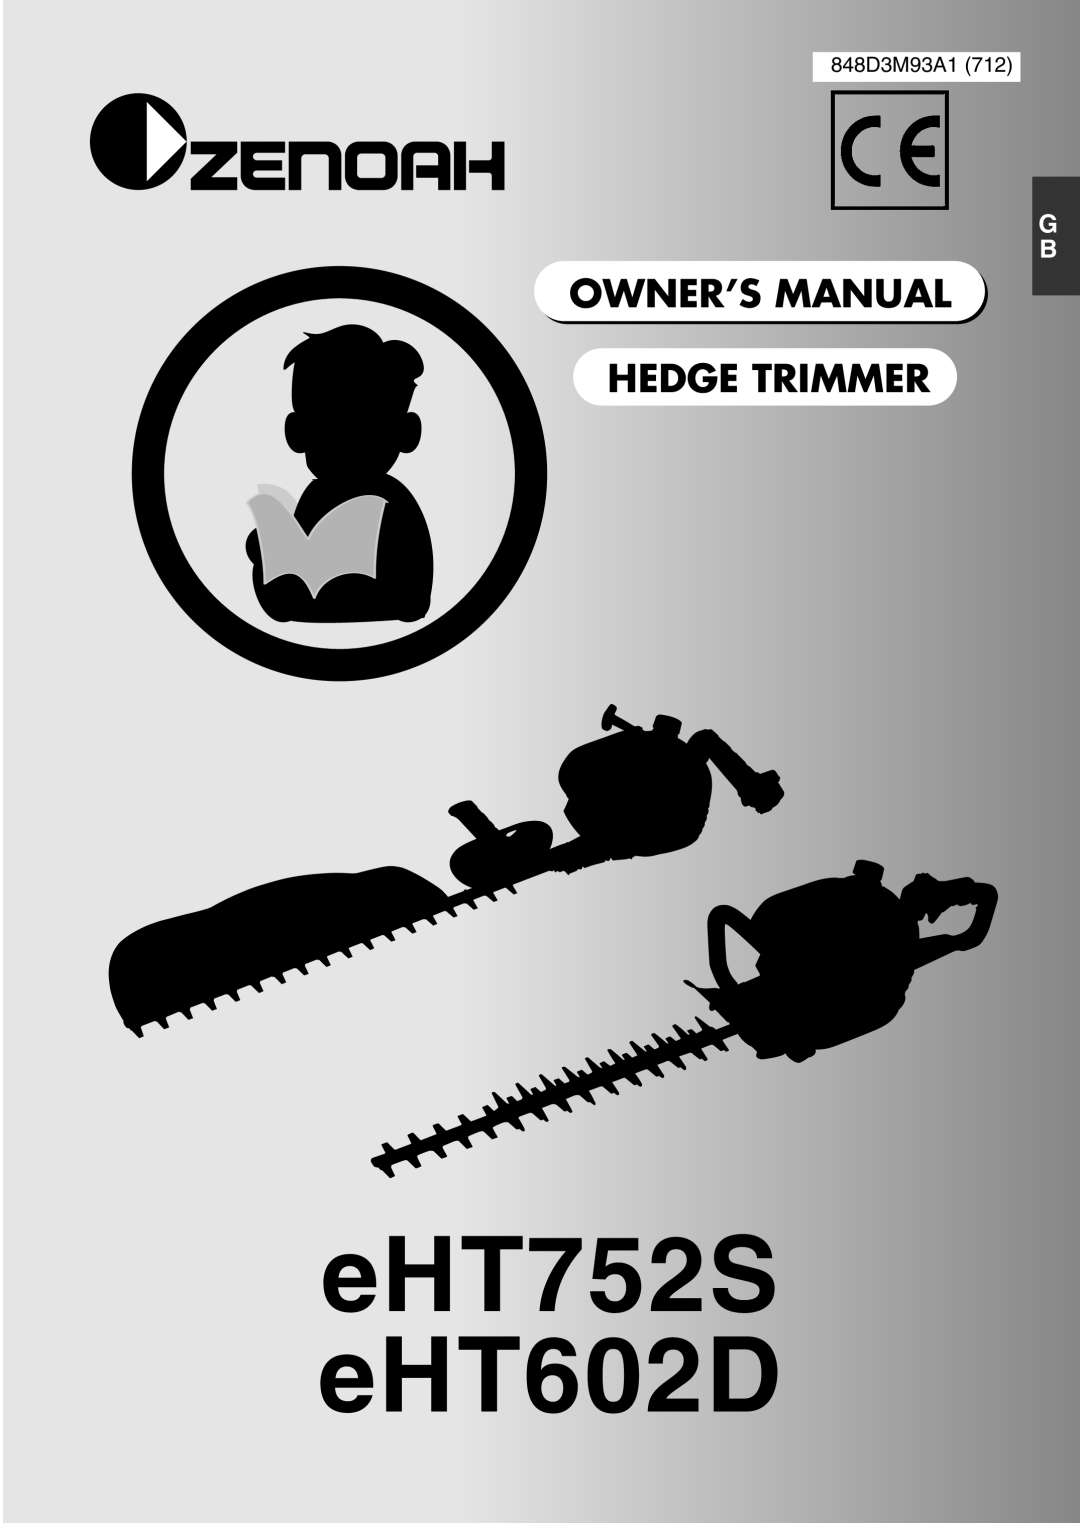 Zenoah EHT752S, EHT602D owner manual eHT752S eHT602D, Owner’S Manual Hedge Trimmer, 848D3M93A1 